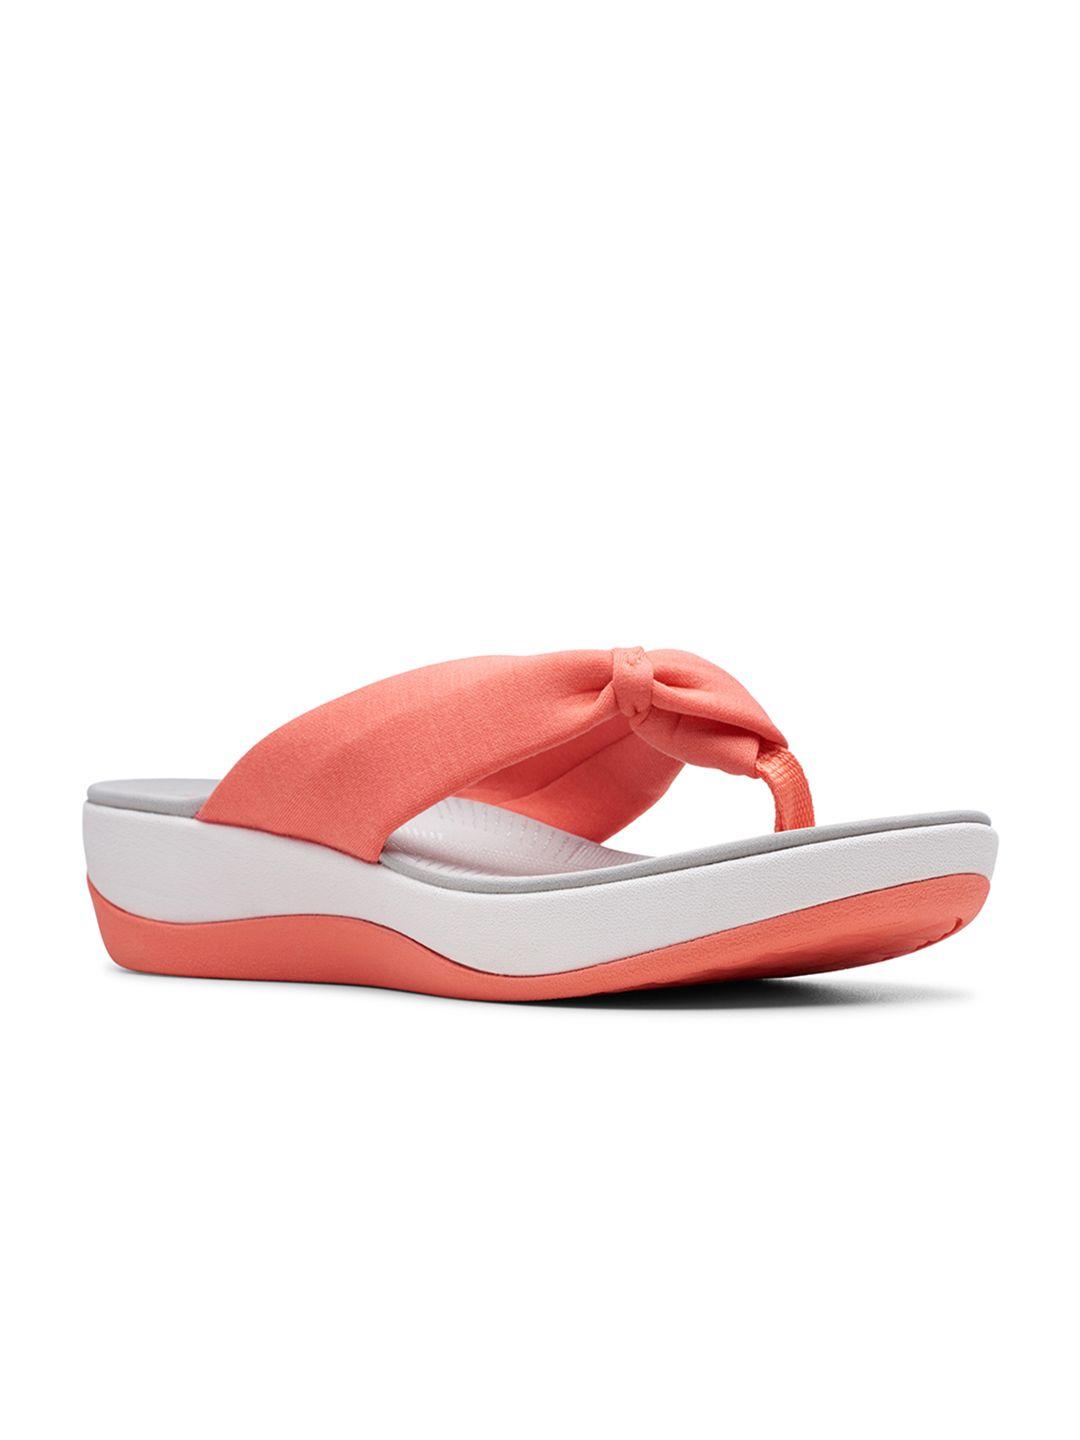 clarks-women-pink-&-white-comfort-sandals